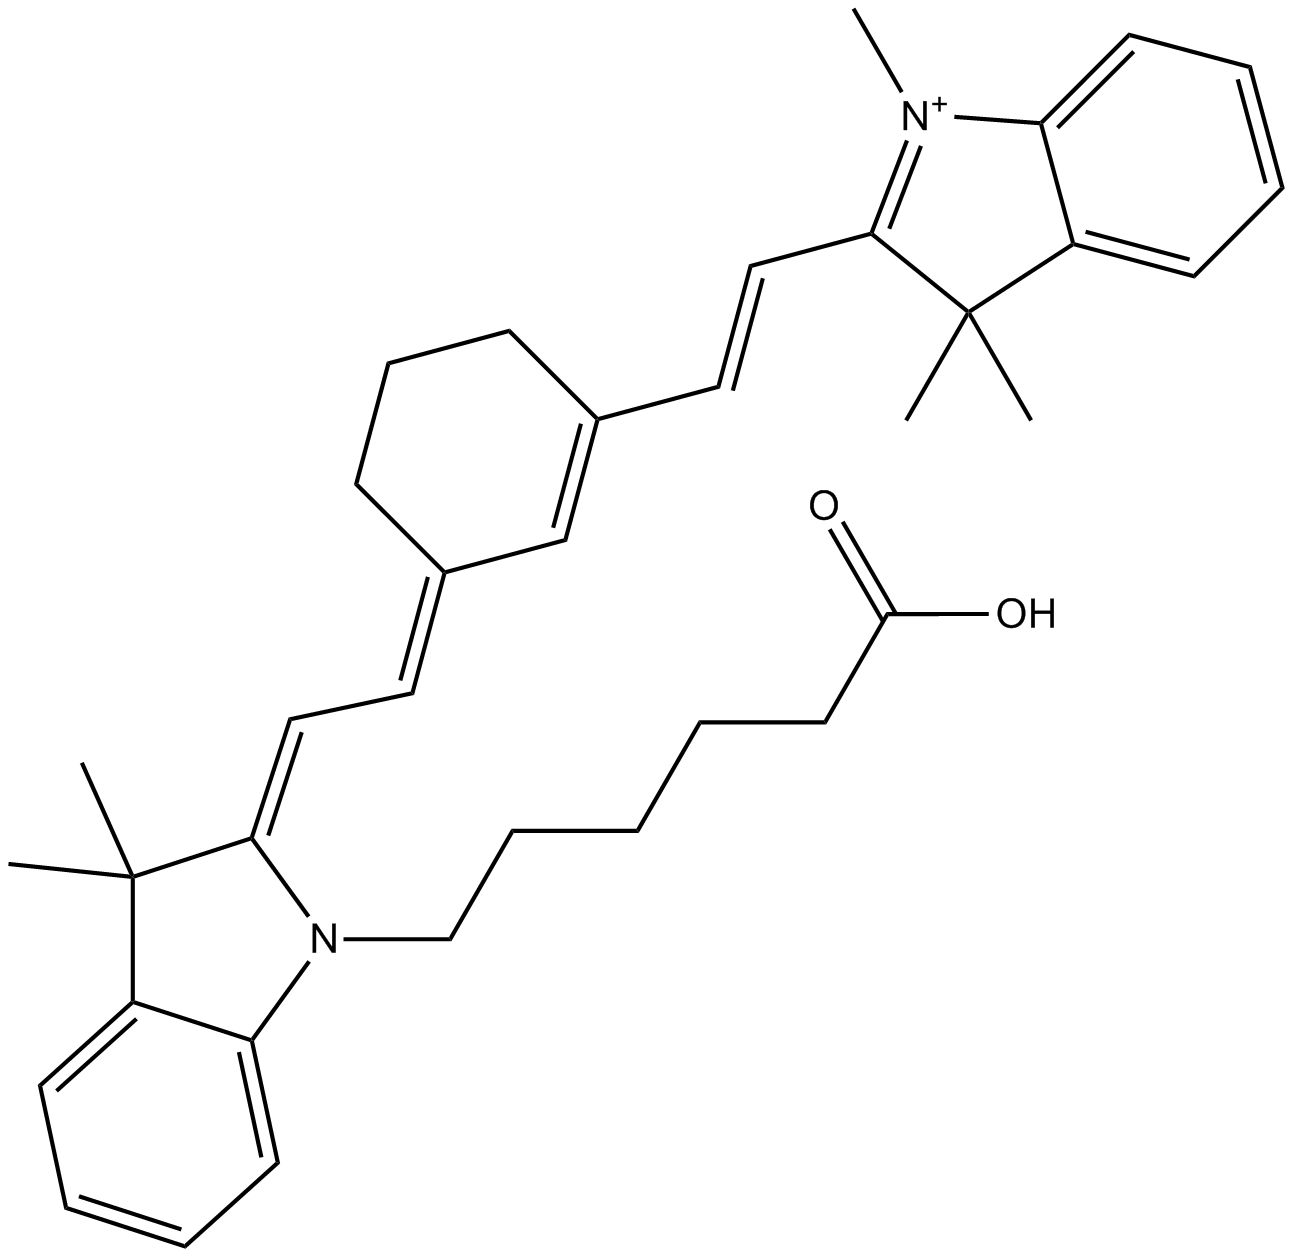 Cy7 carboxylic acid (non-sulfonated) Chemische Struktur